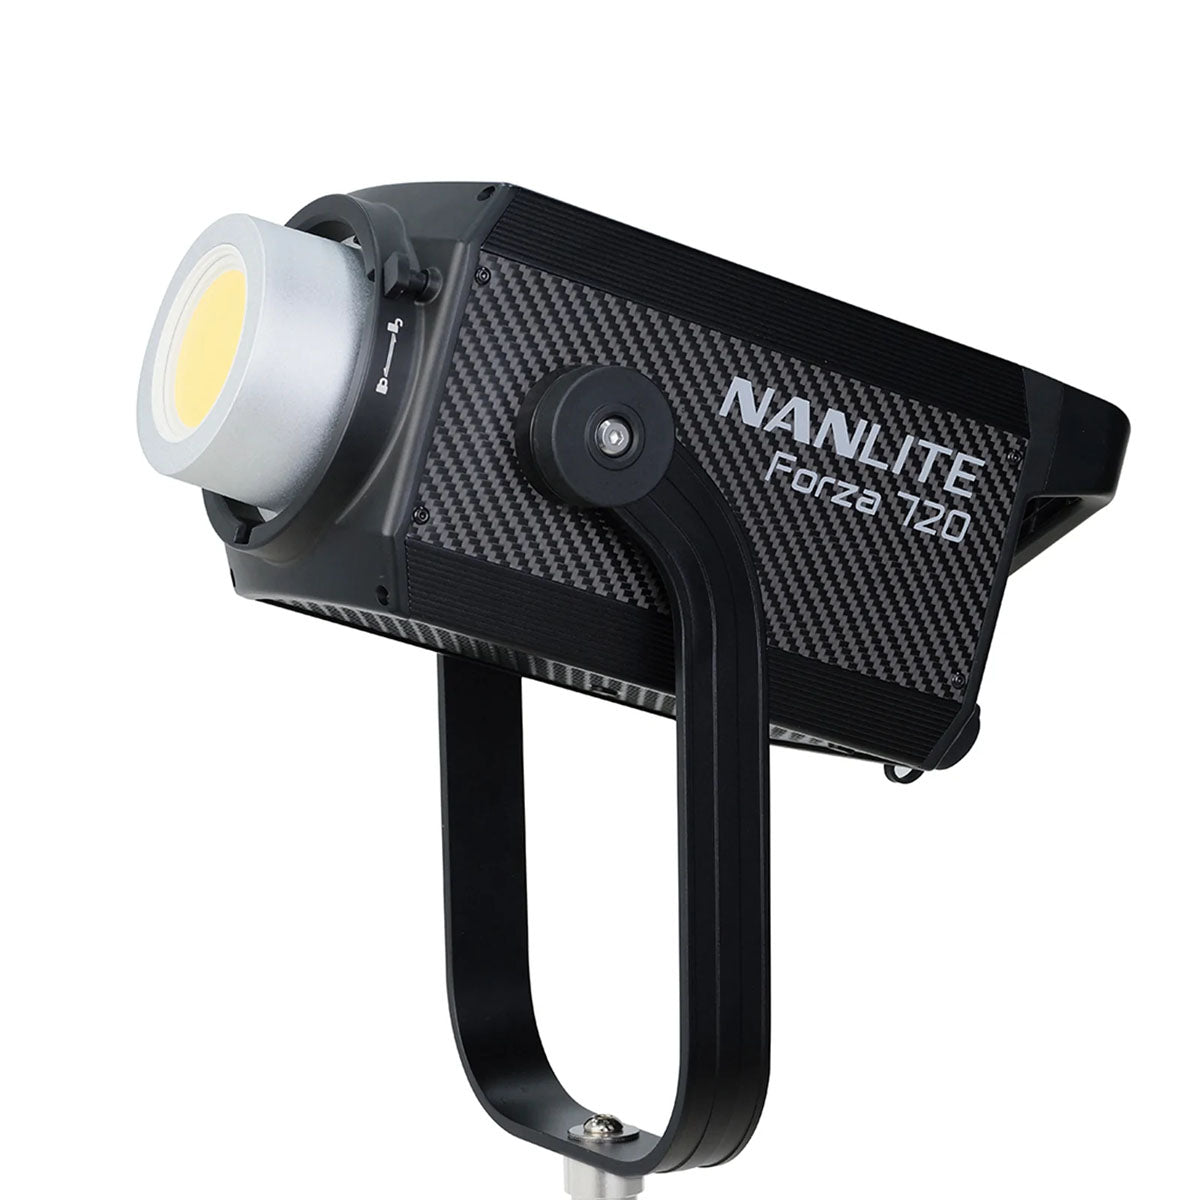 NANLITE(ナンライト) LEDライト Forza 720 (31-2007)